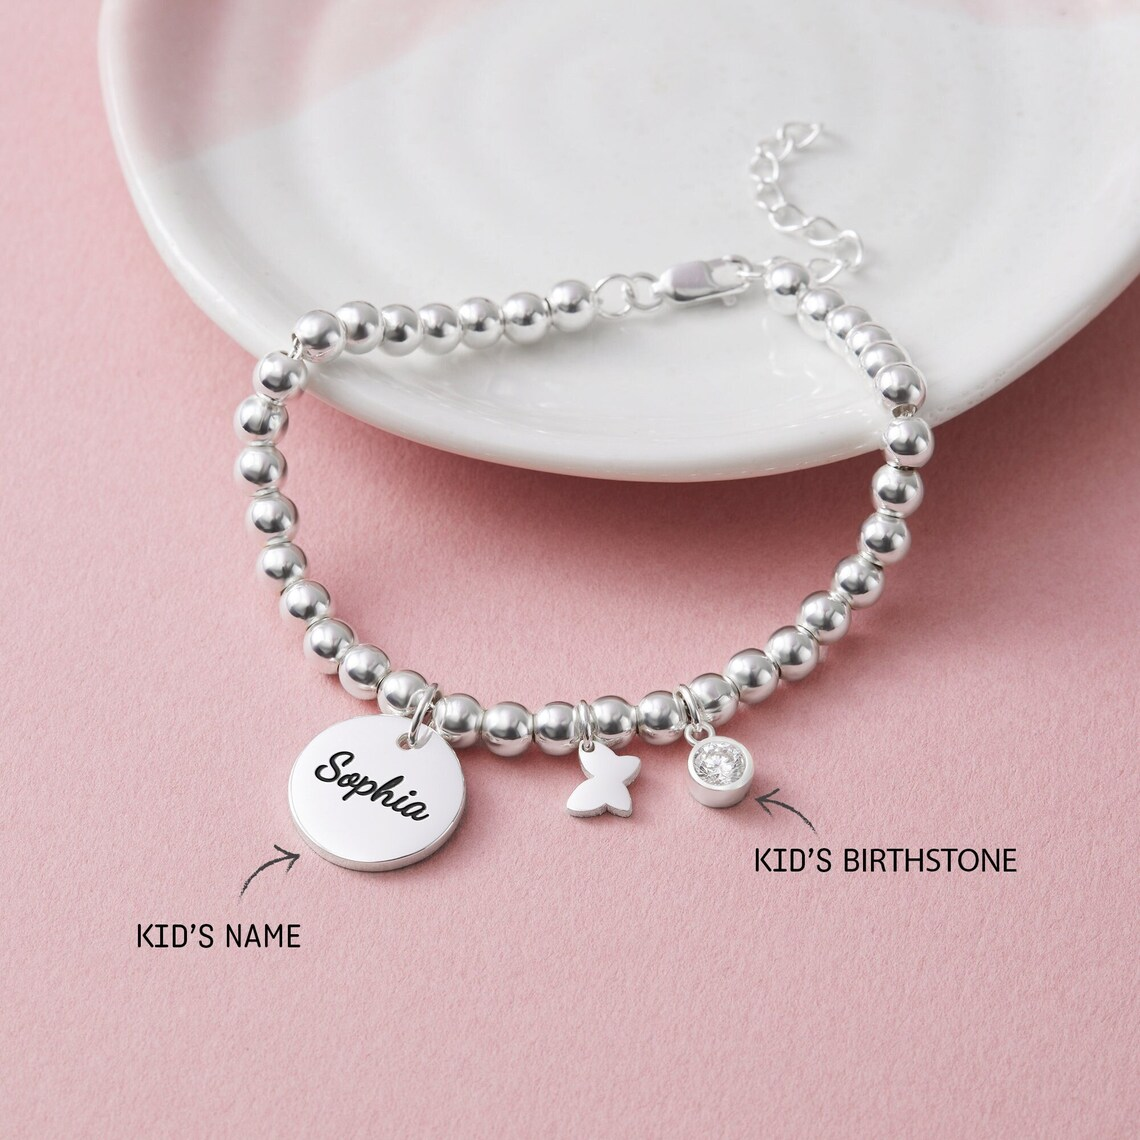 Personalized Birthstone Name Bracelet For Kids